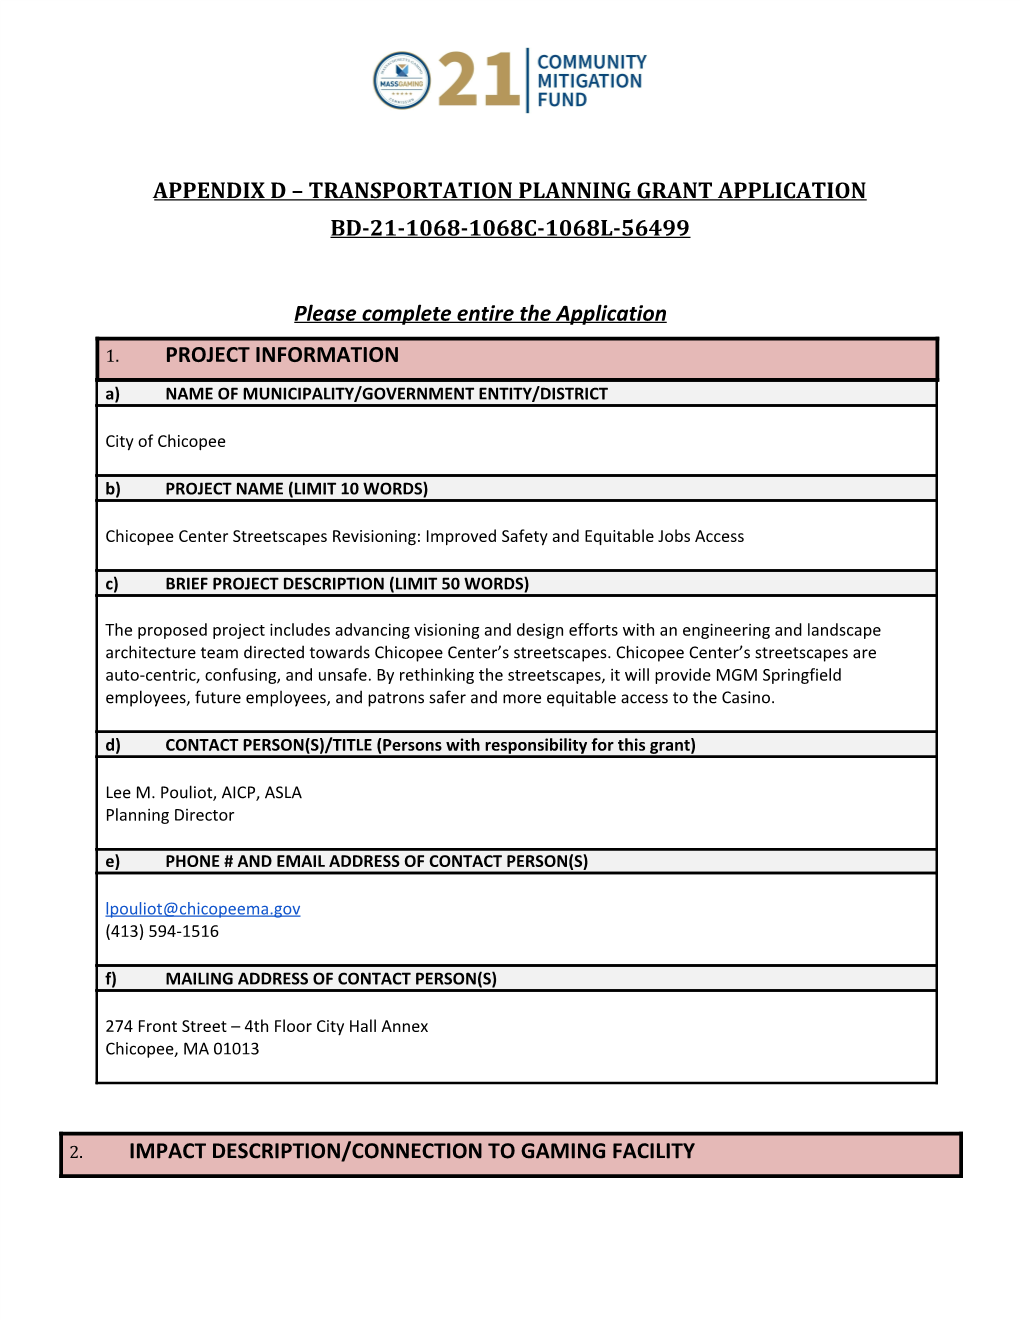 City of Chicopee 2021 Transportation Planning Grant Application